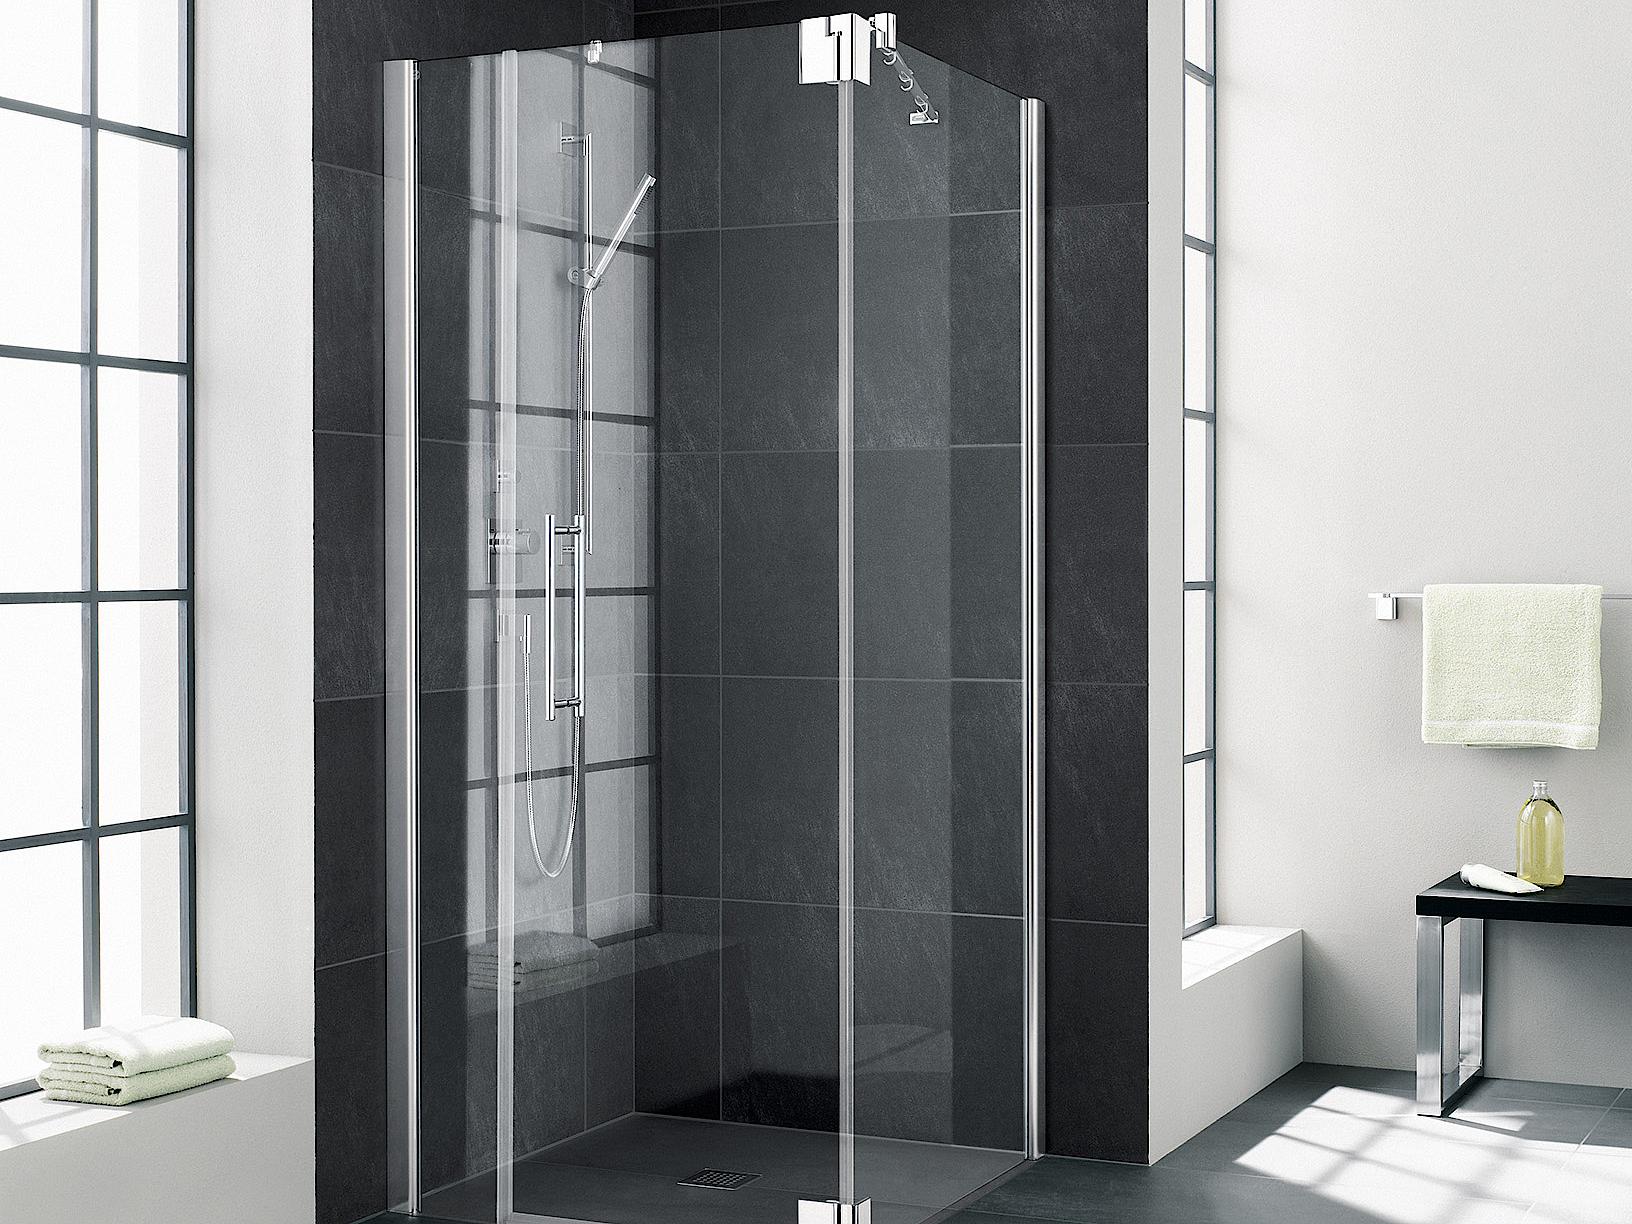 Kermi hinged shower enclosure, PASA XP single panel hinged door and fixed panel